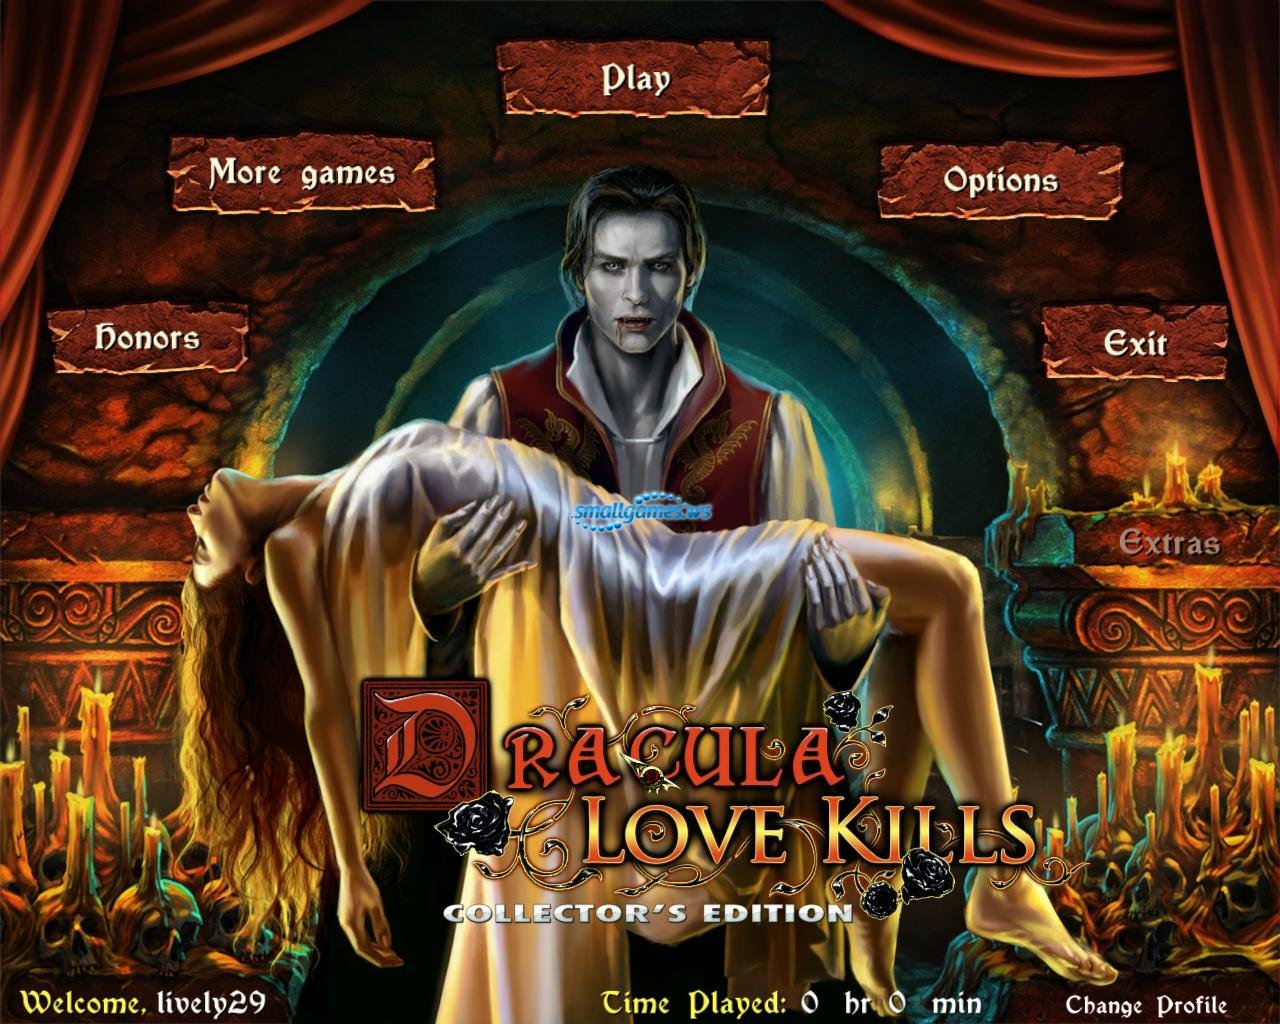 Dracula: Love Kills Collectors Edition - Скачать Игру Бесплатно